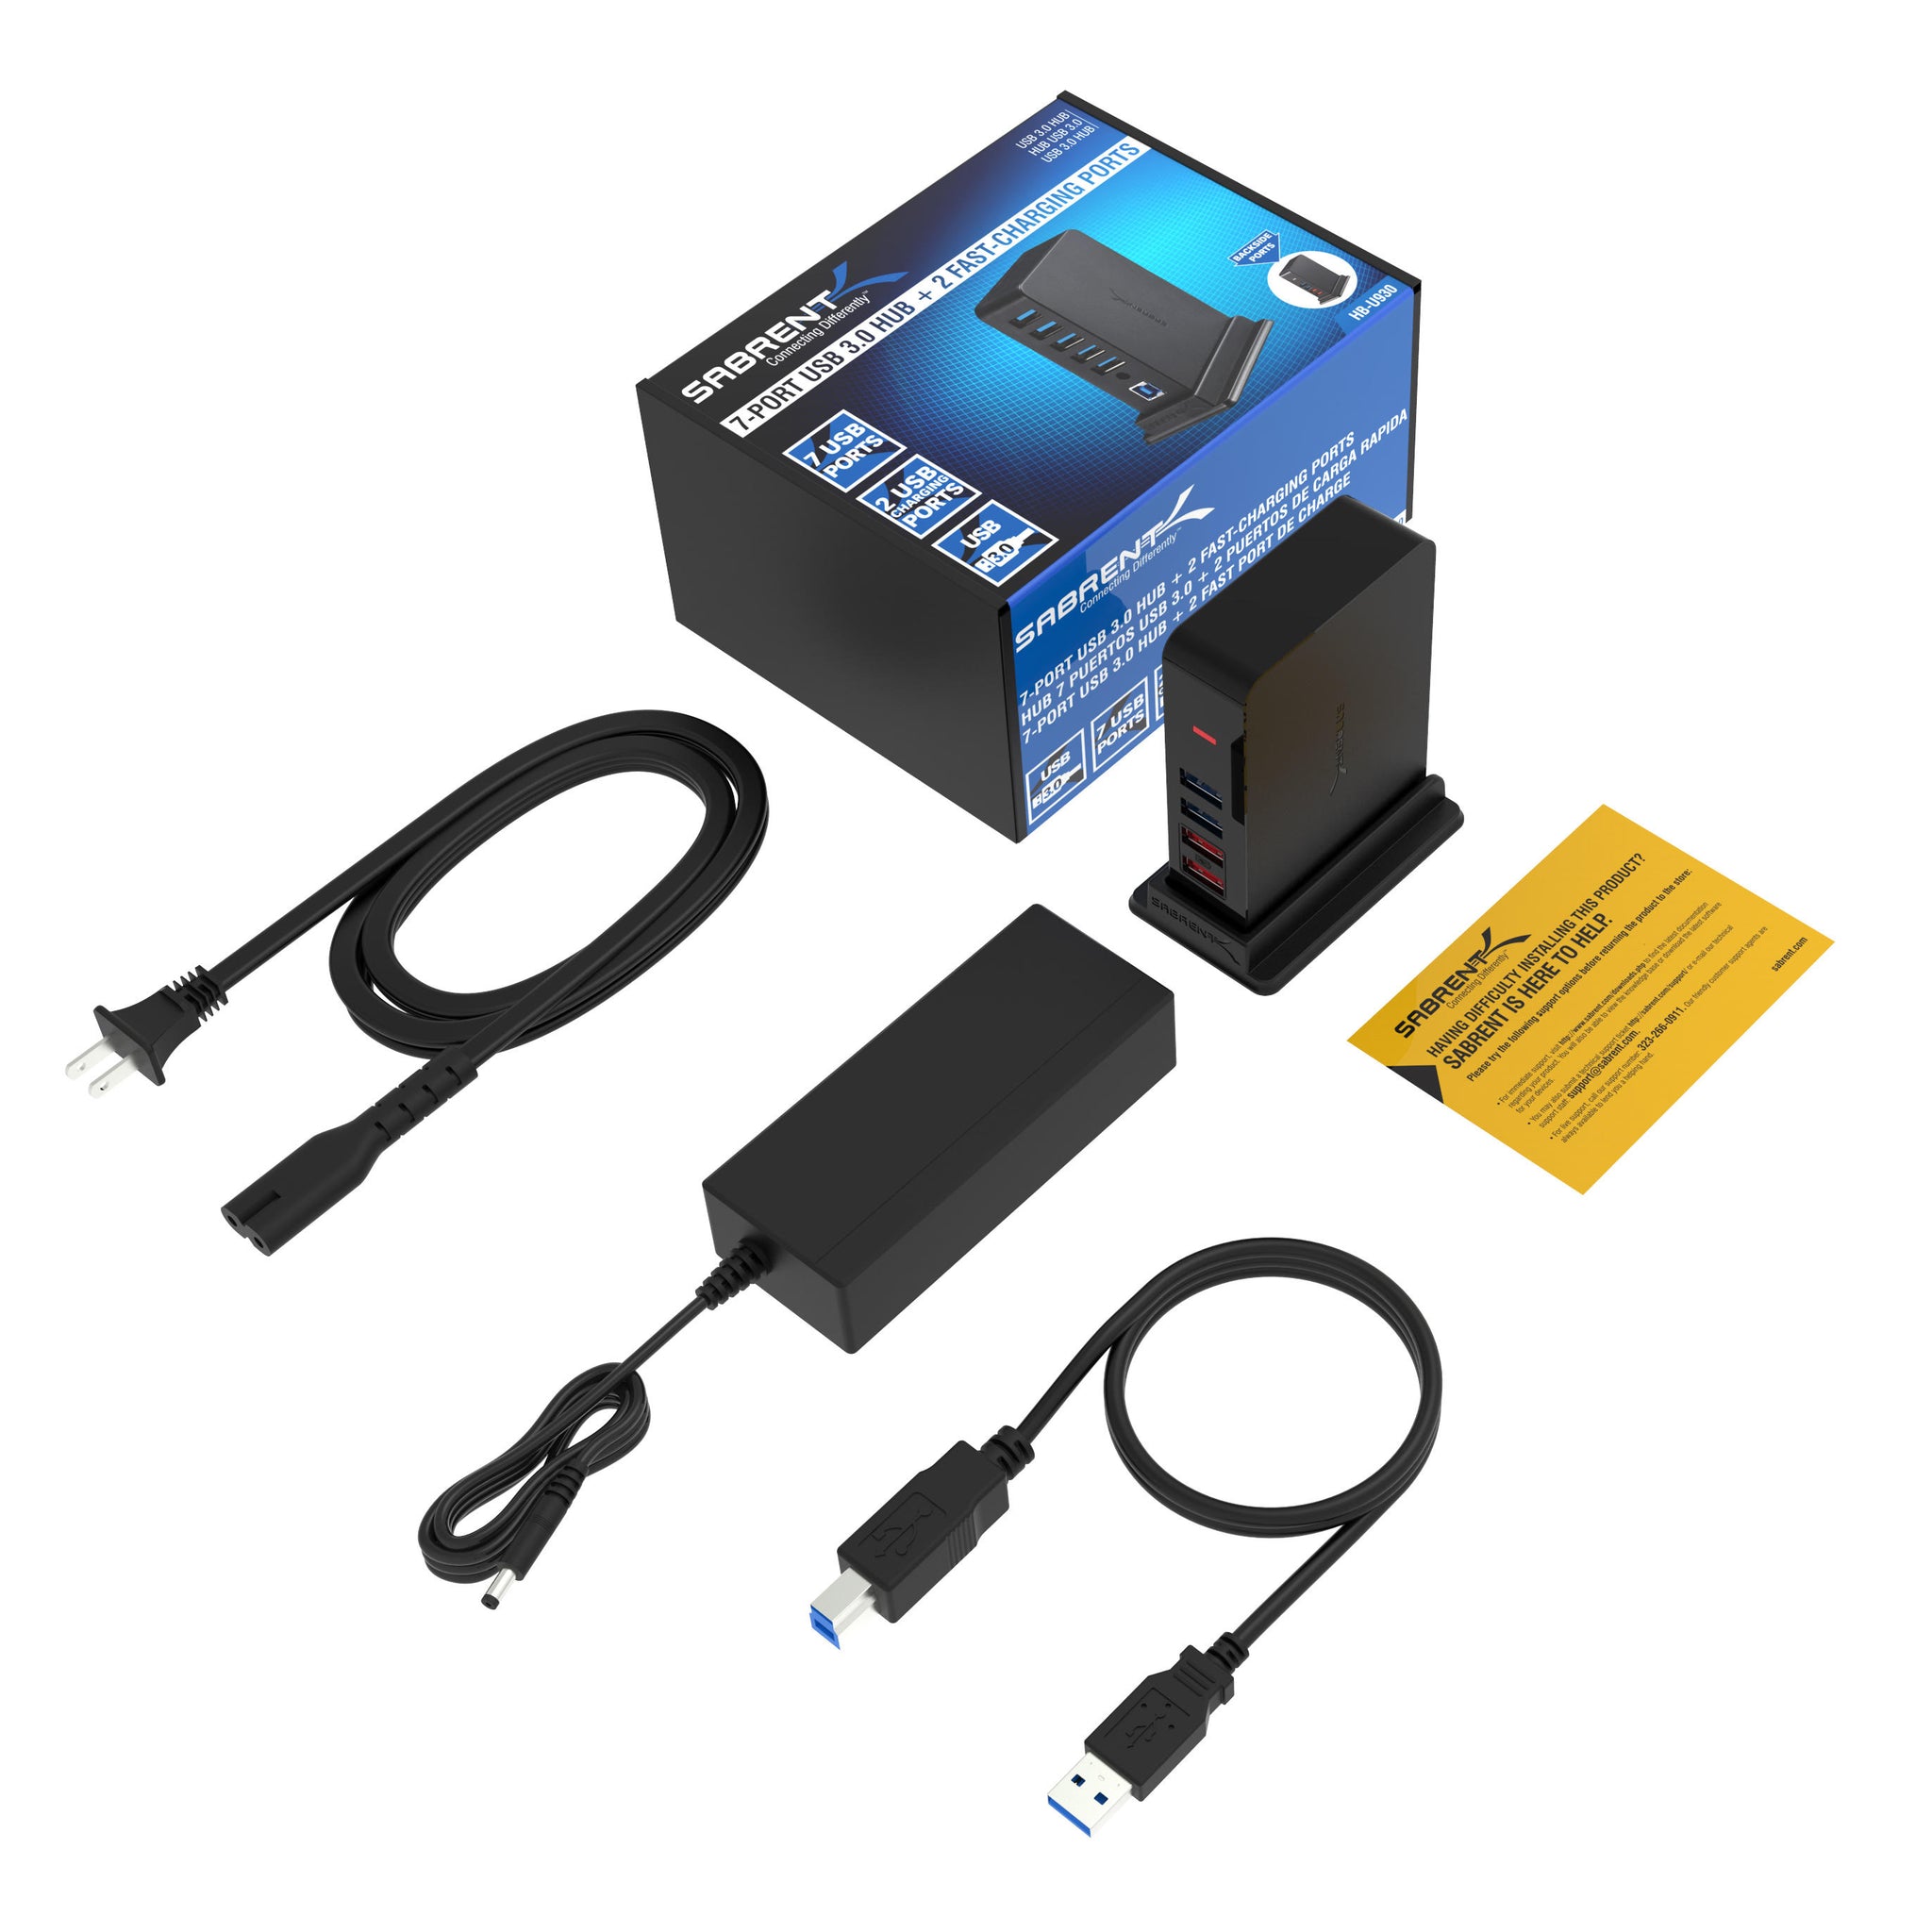  SABRENT Hub USB 2.0 de 4 puertos + cable de extensión